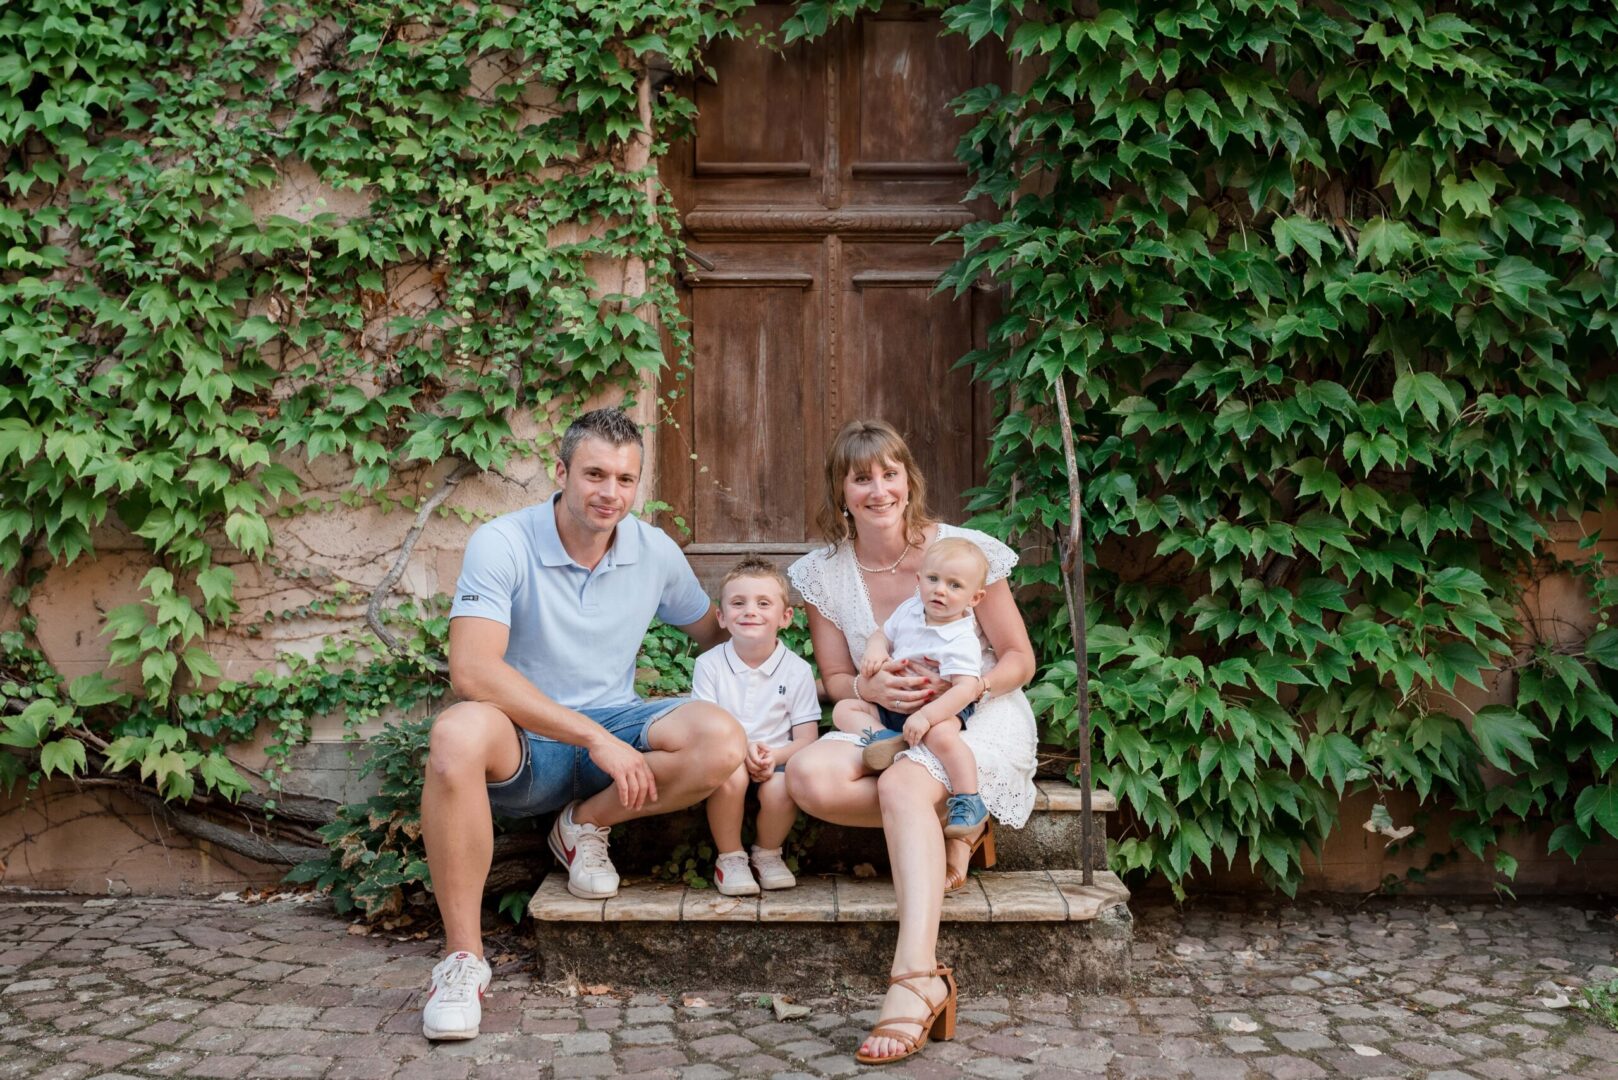 séance photo Famille en extérieur, en Alsace, Kaysersberg, Obernai, Haguenau, Strasbourg